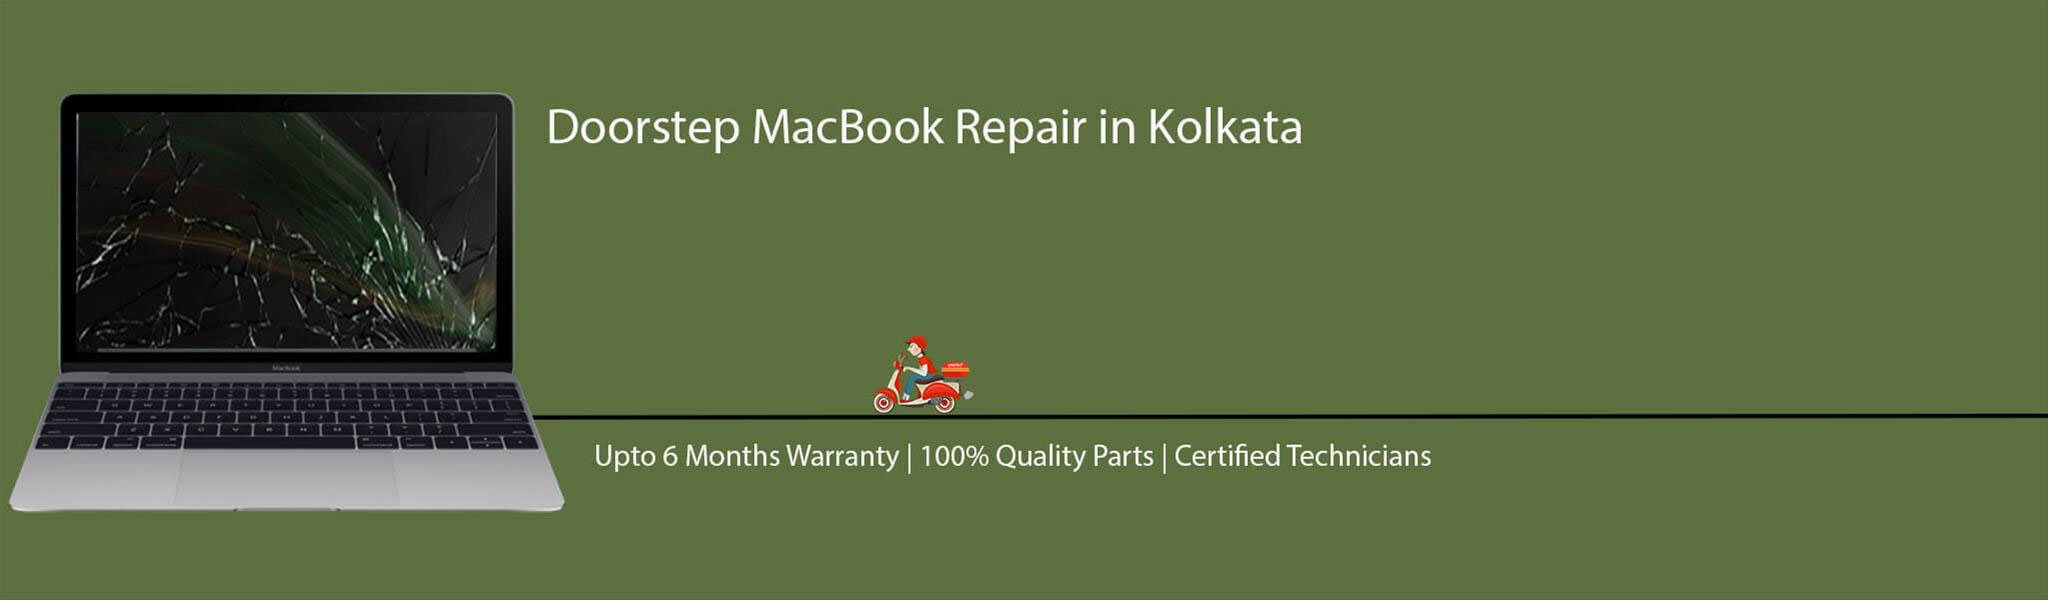 macbook-laptop-banner-kolkata.jpg